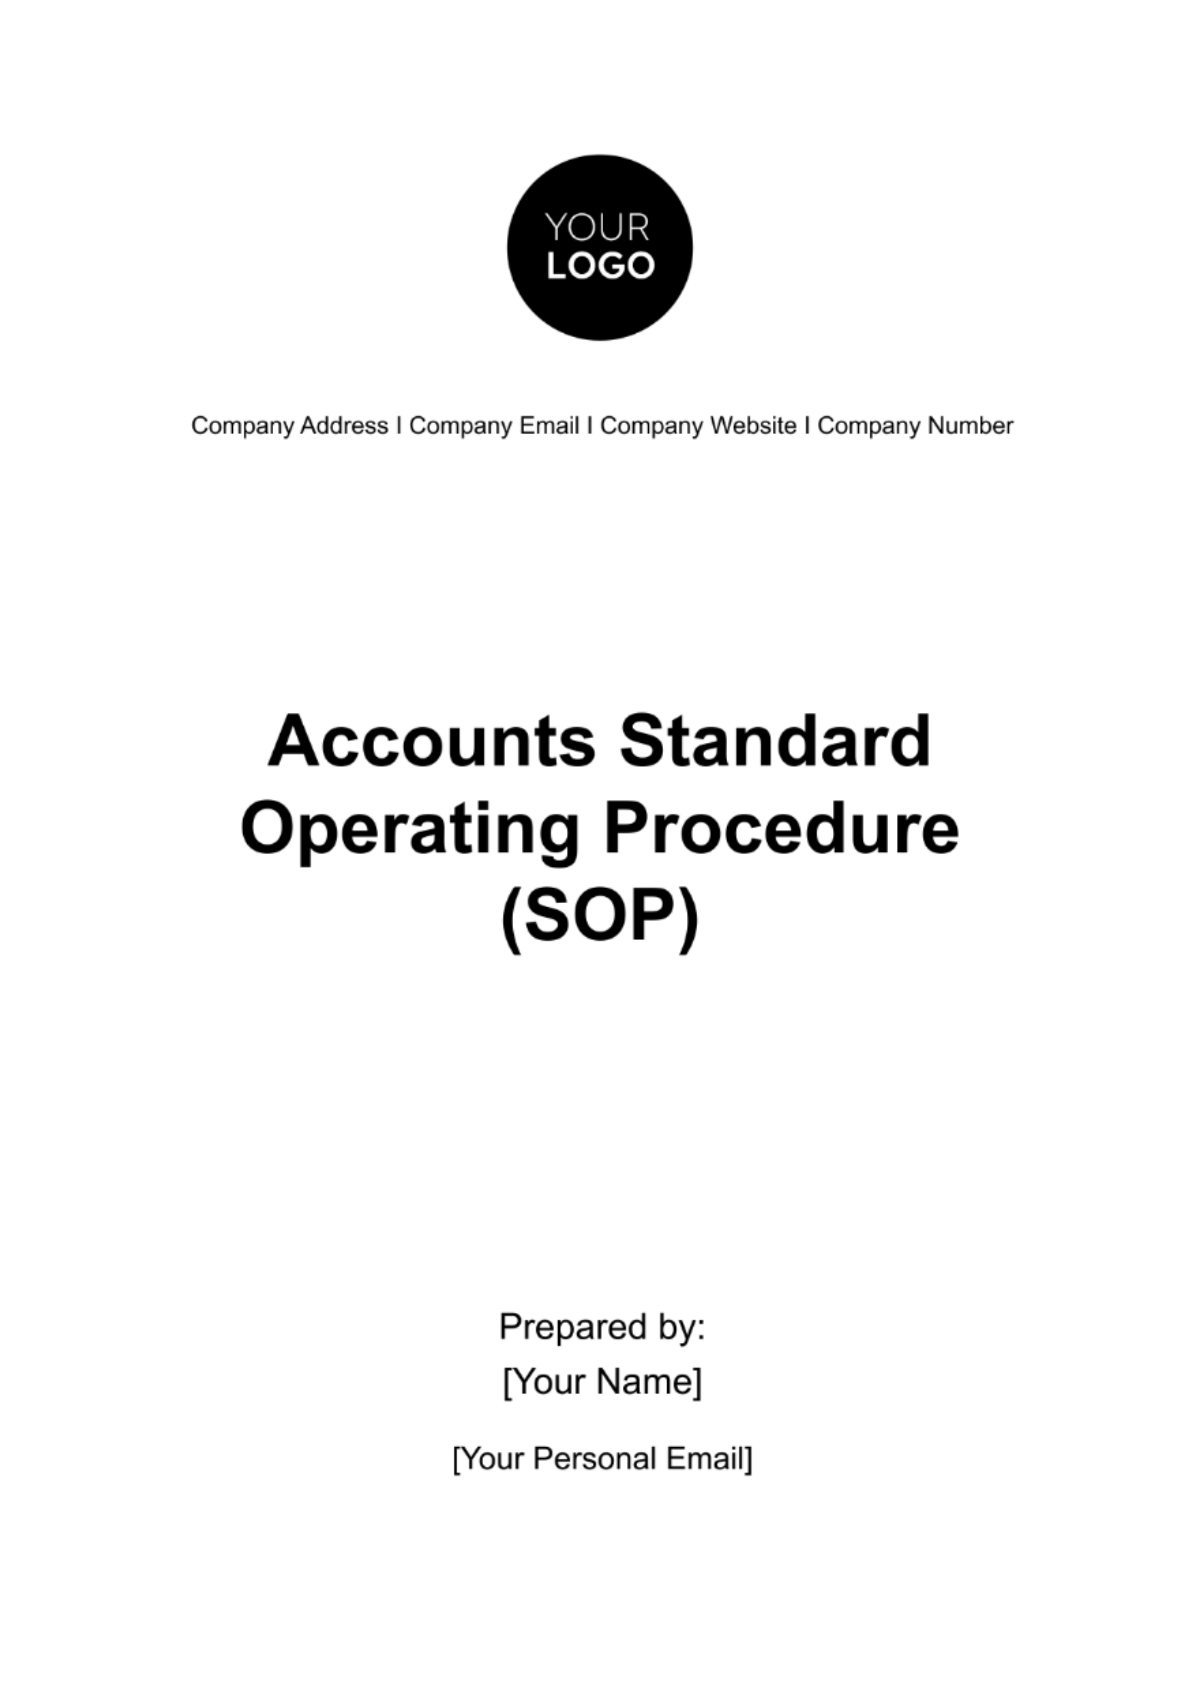 Accounts Standard Operating Procedure (SOP) Template